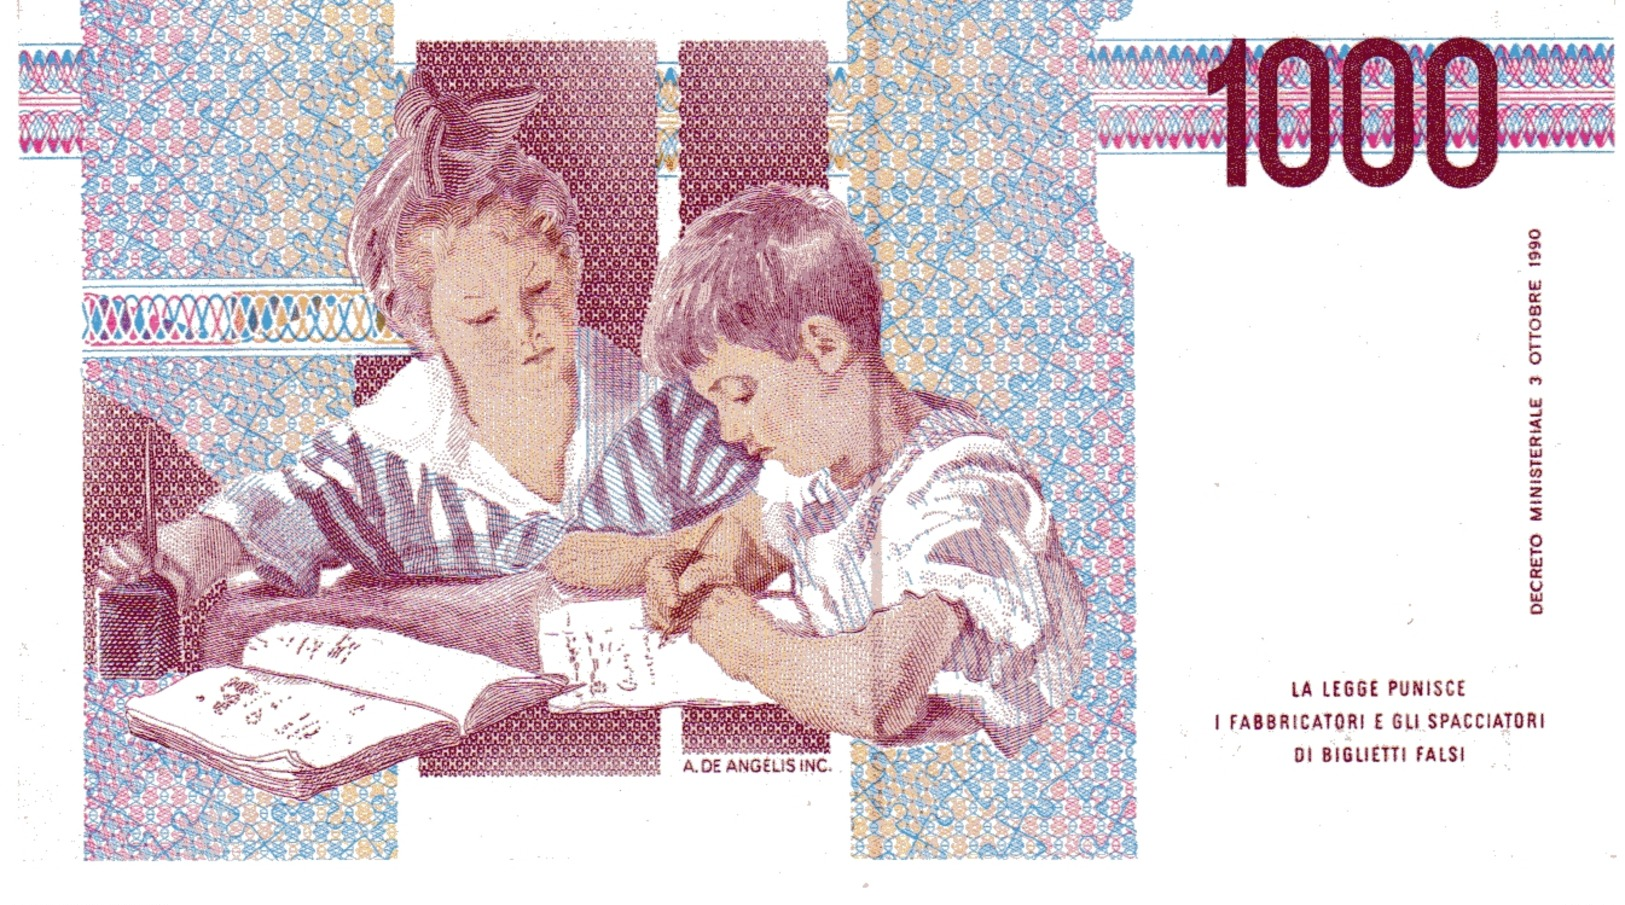 1000-Lire Banknote NEU - UNBENÜTZT - 1.000 Lire